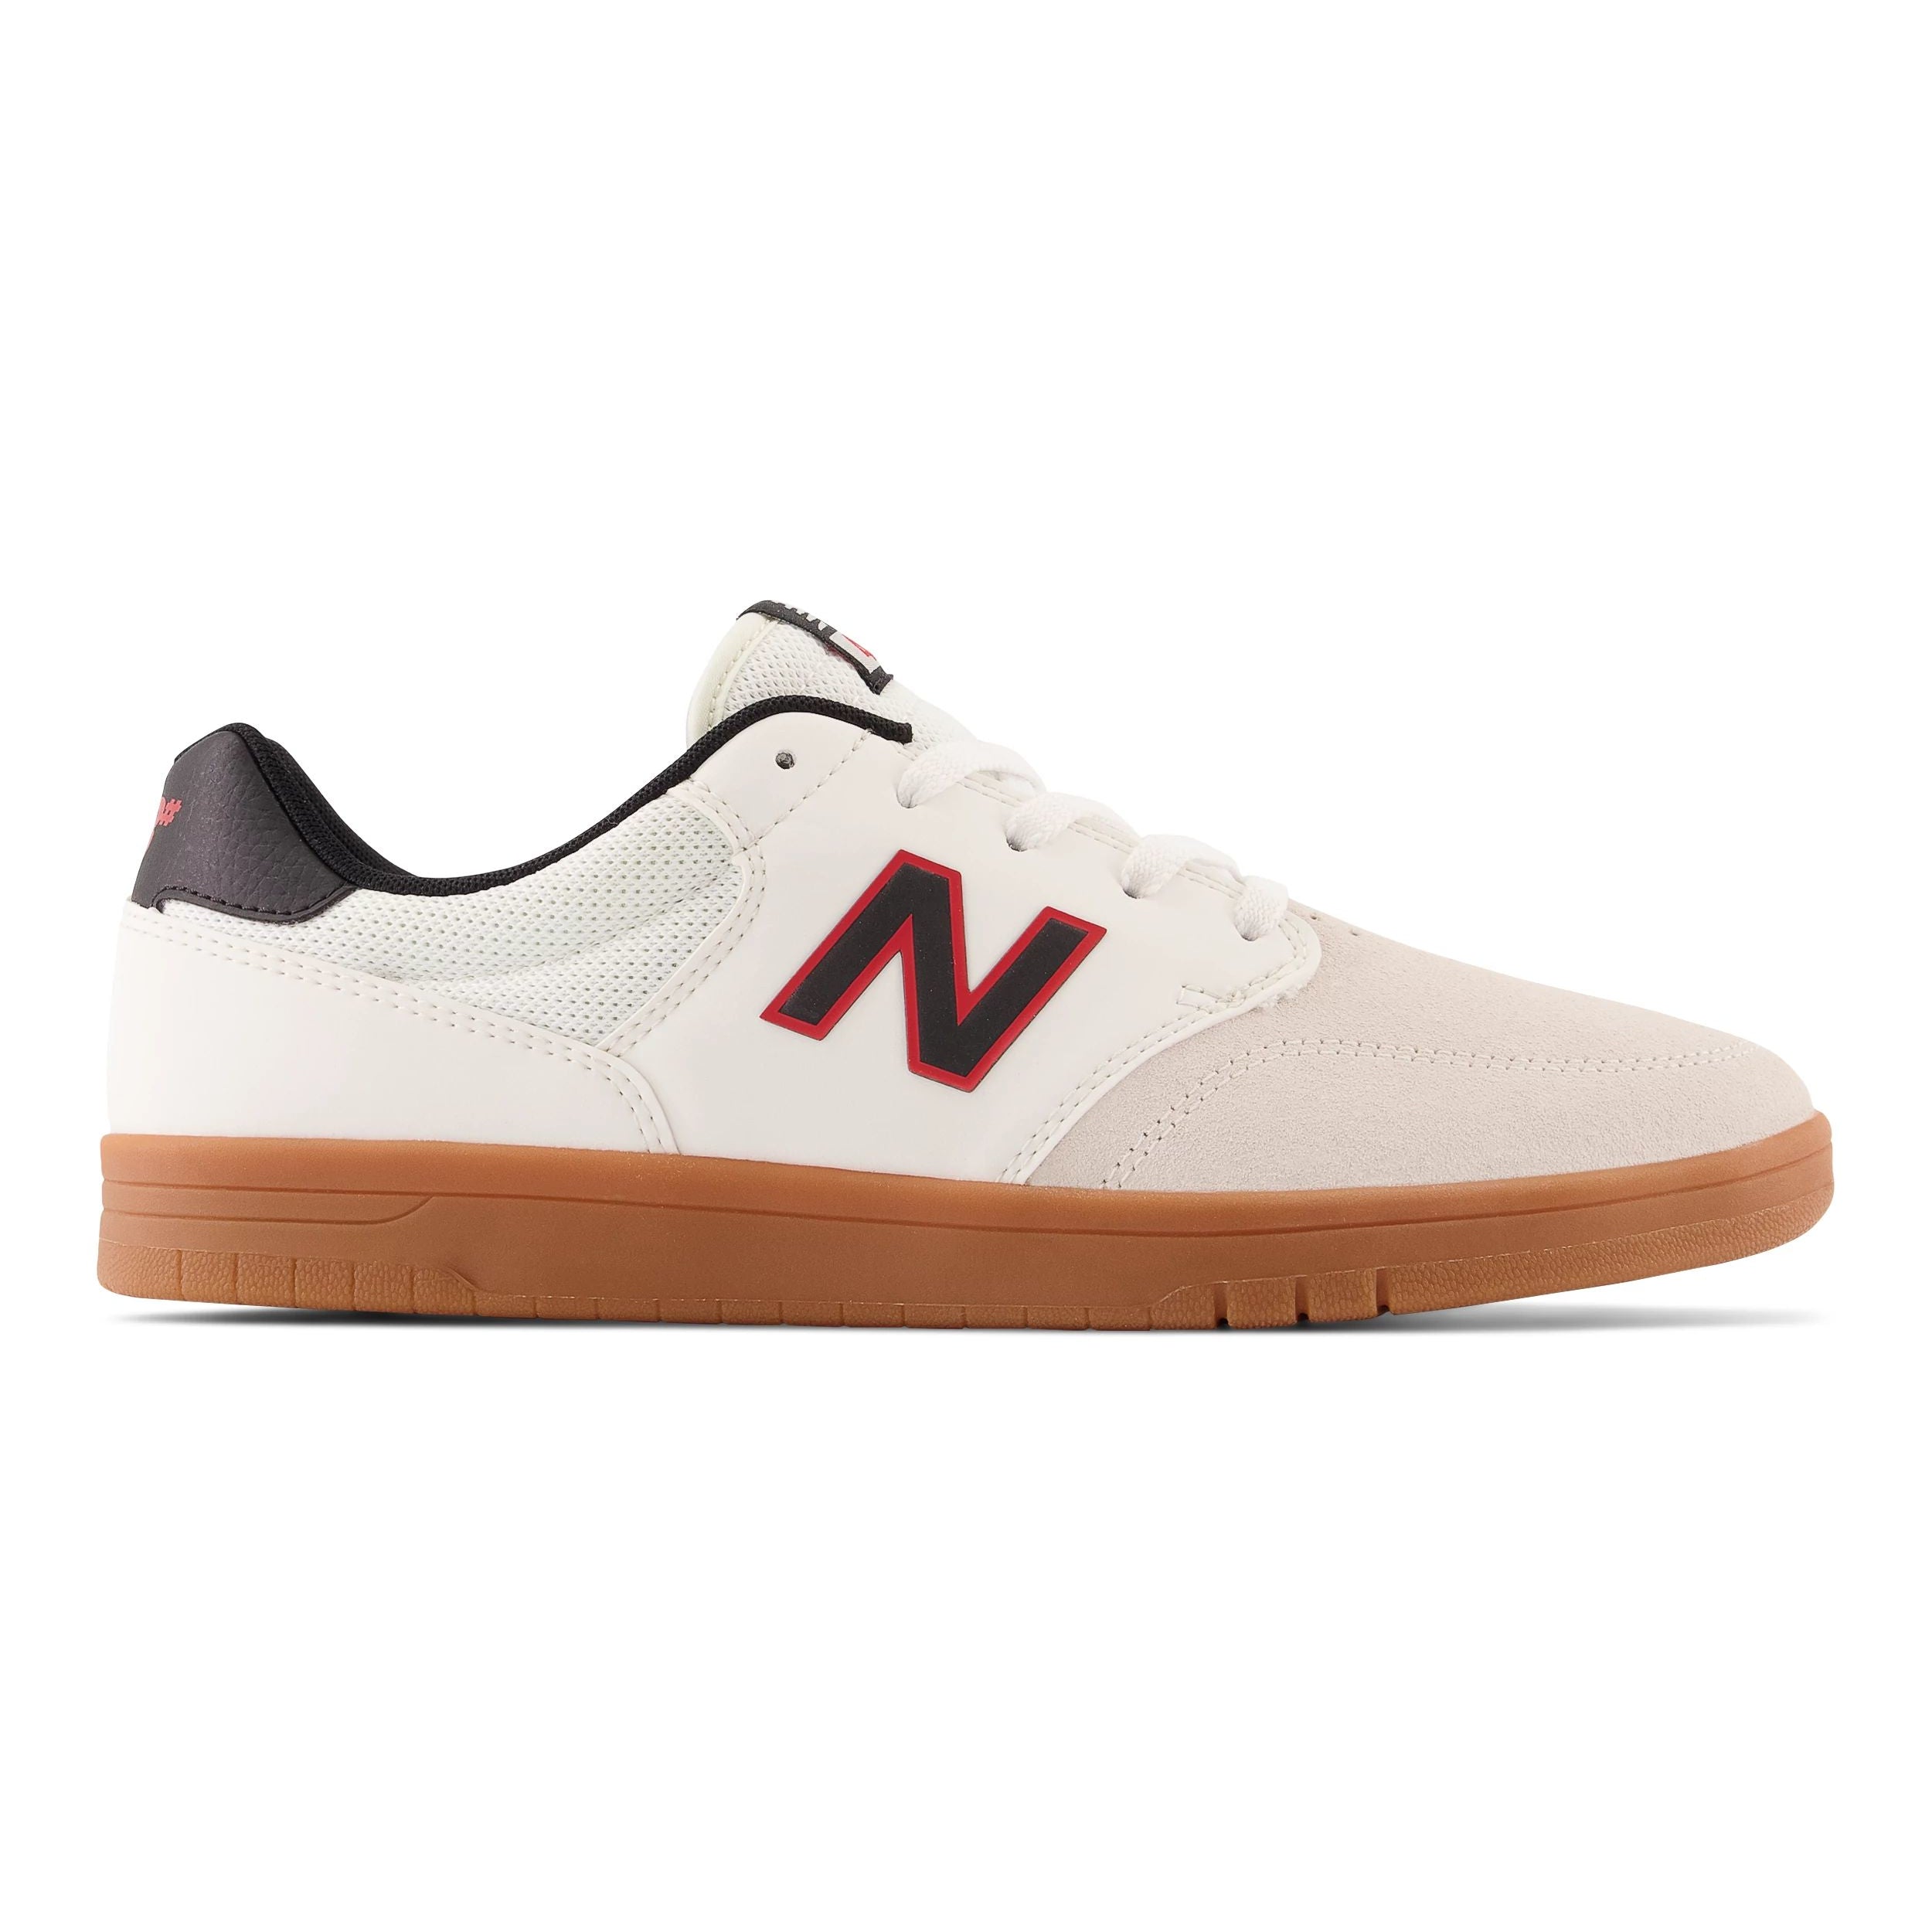 White/Gum NM425 NB Numeric Skate Shoe